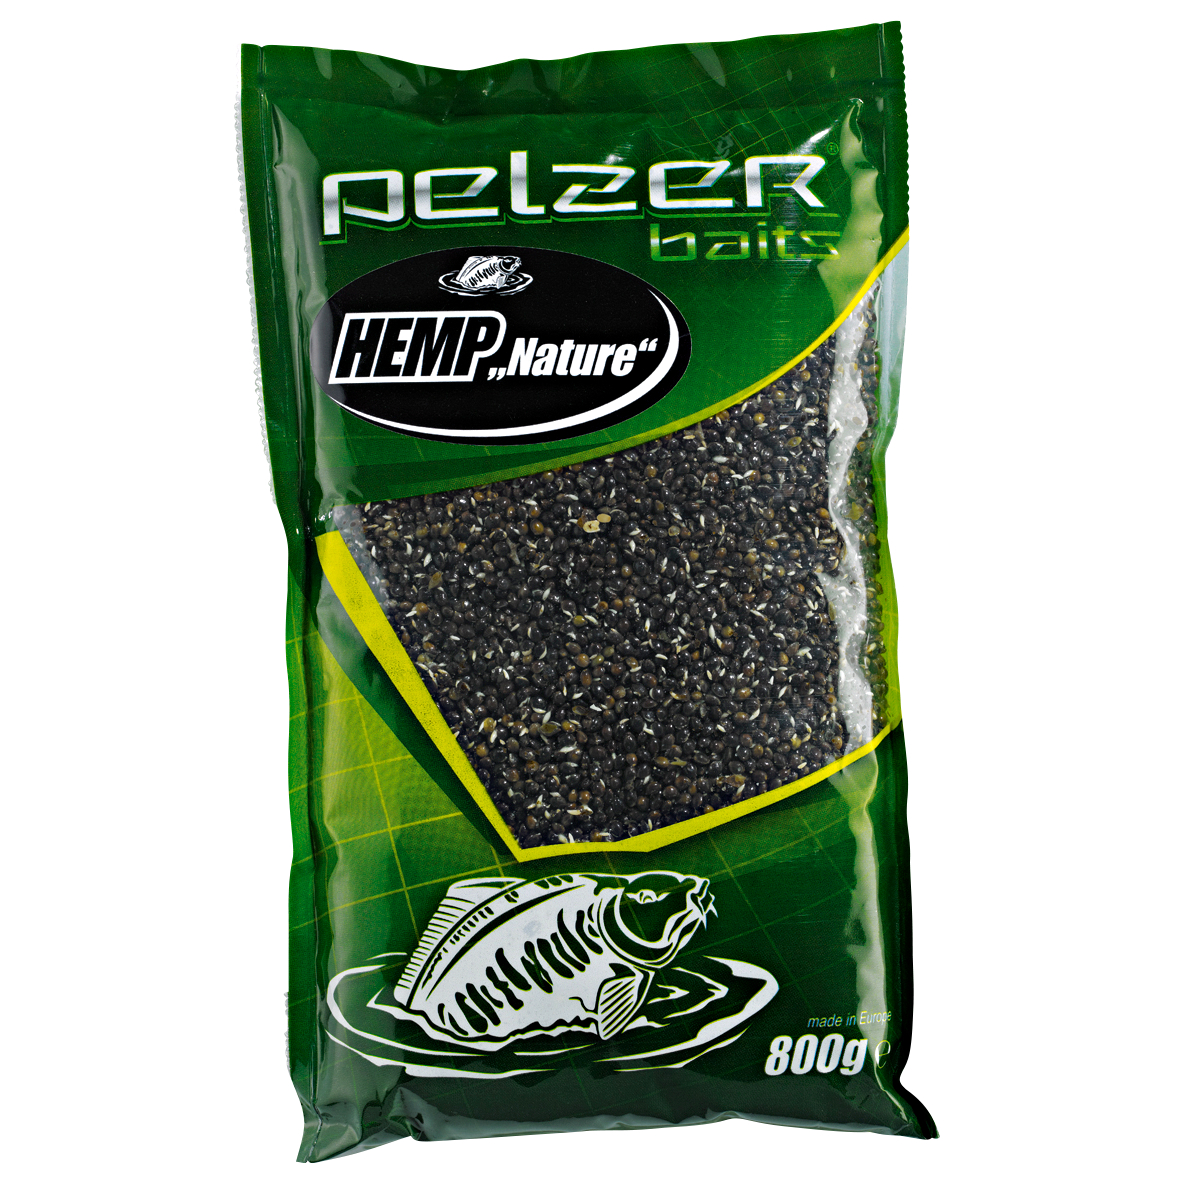 Pelzer Particle Baits Carp Corn (Hemp Nature) 